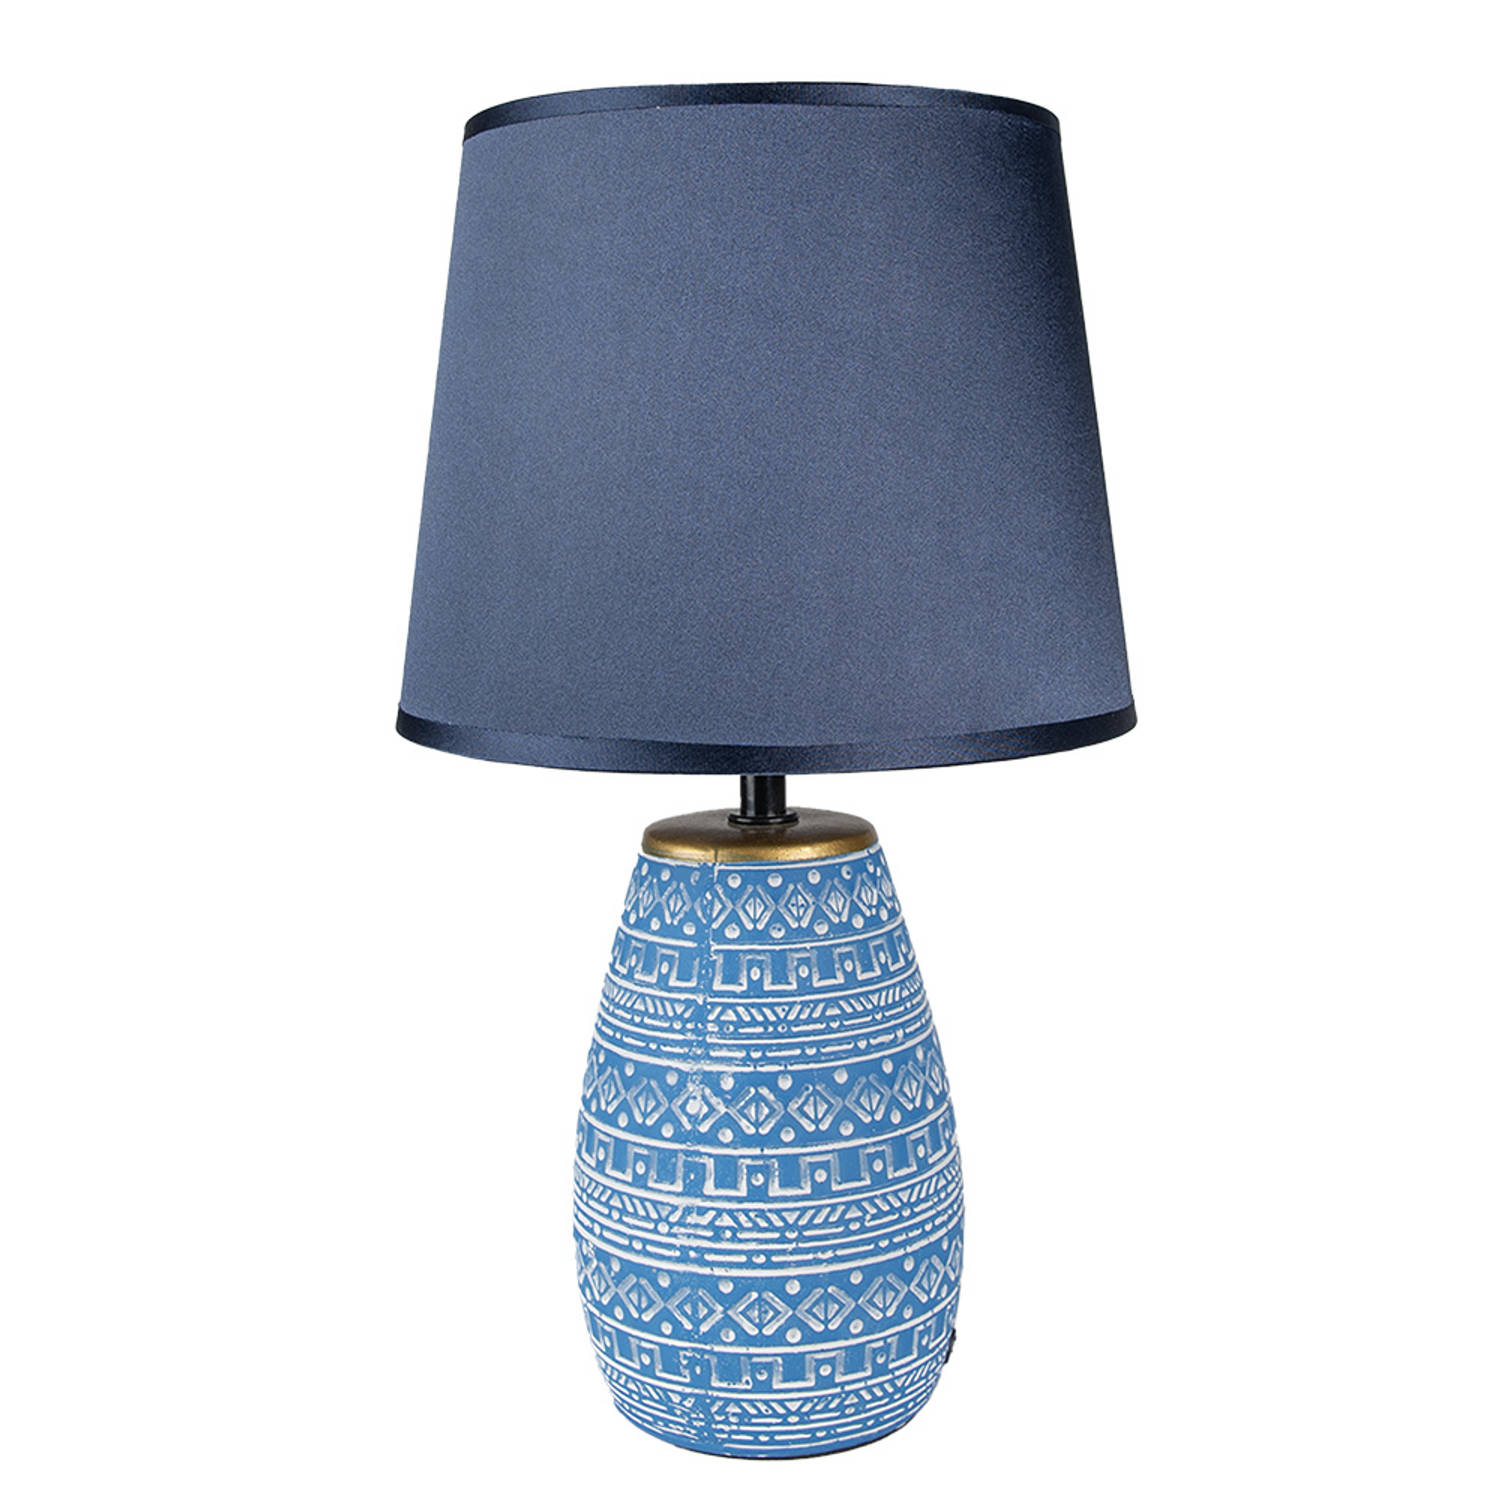 HAES DECO Tafellamp Modern Chic Stijlvolle Lamp, Ø 20x35 cm Blauw-Wit Bureaulamp, Sfeerlamp, Nachtla